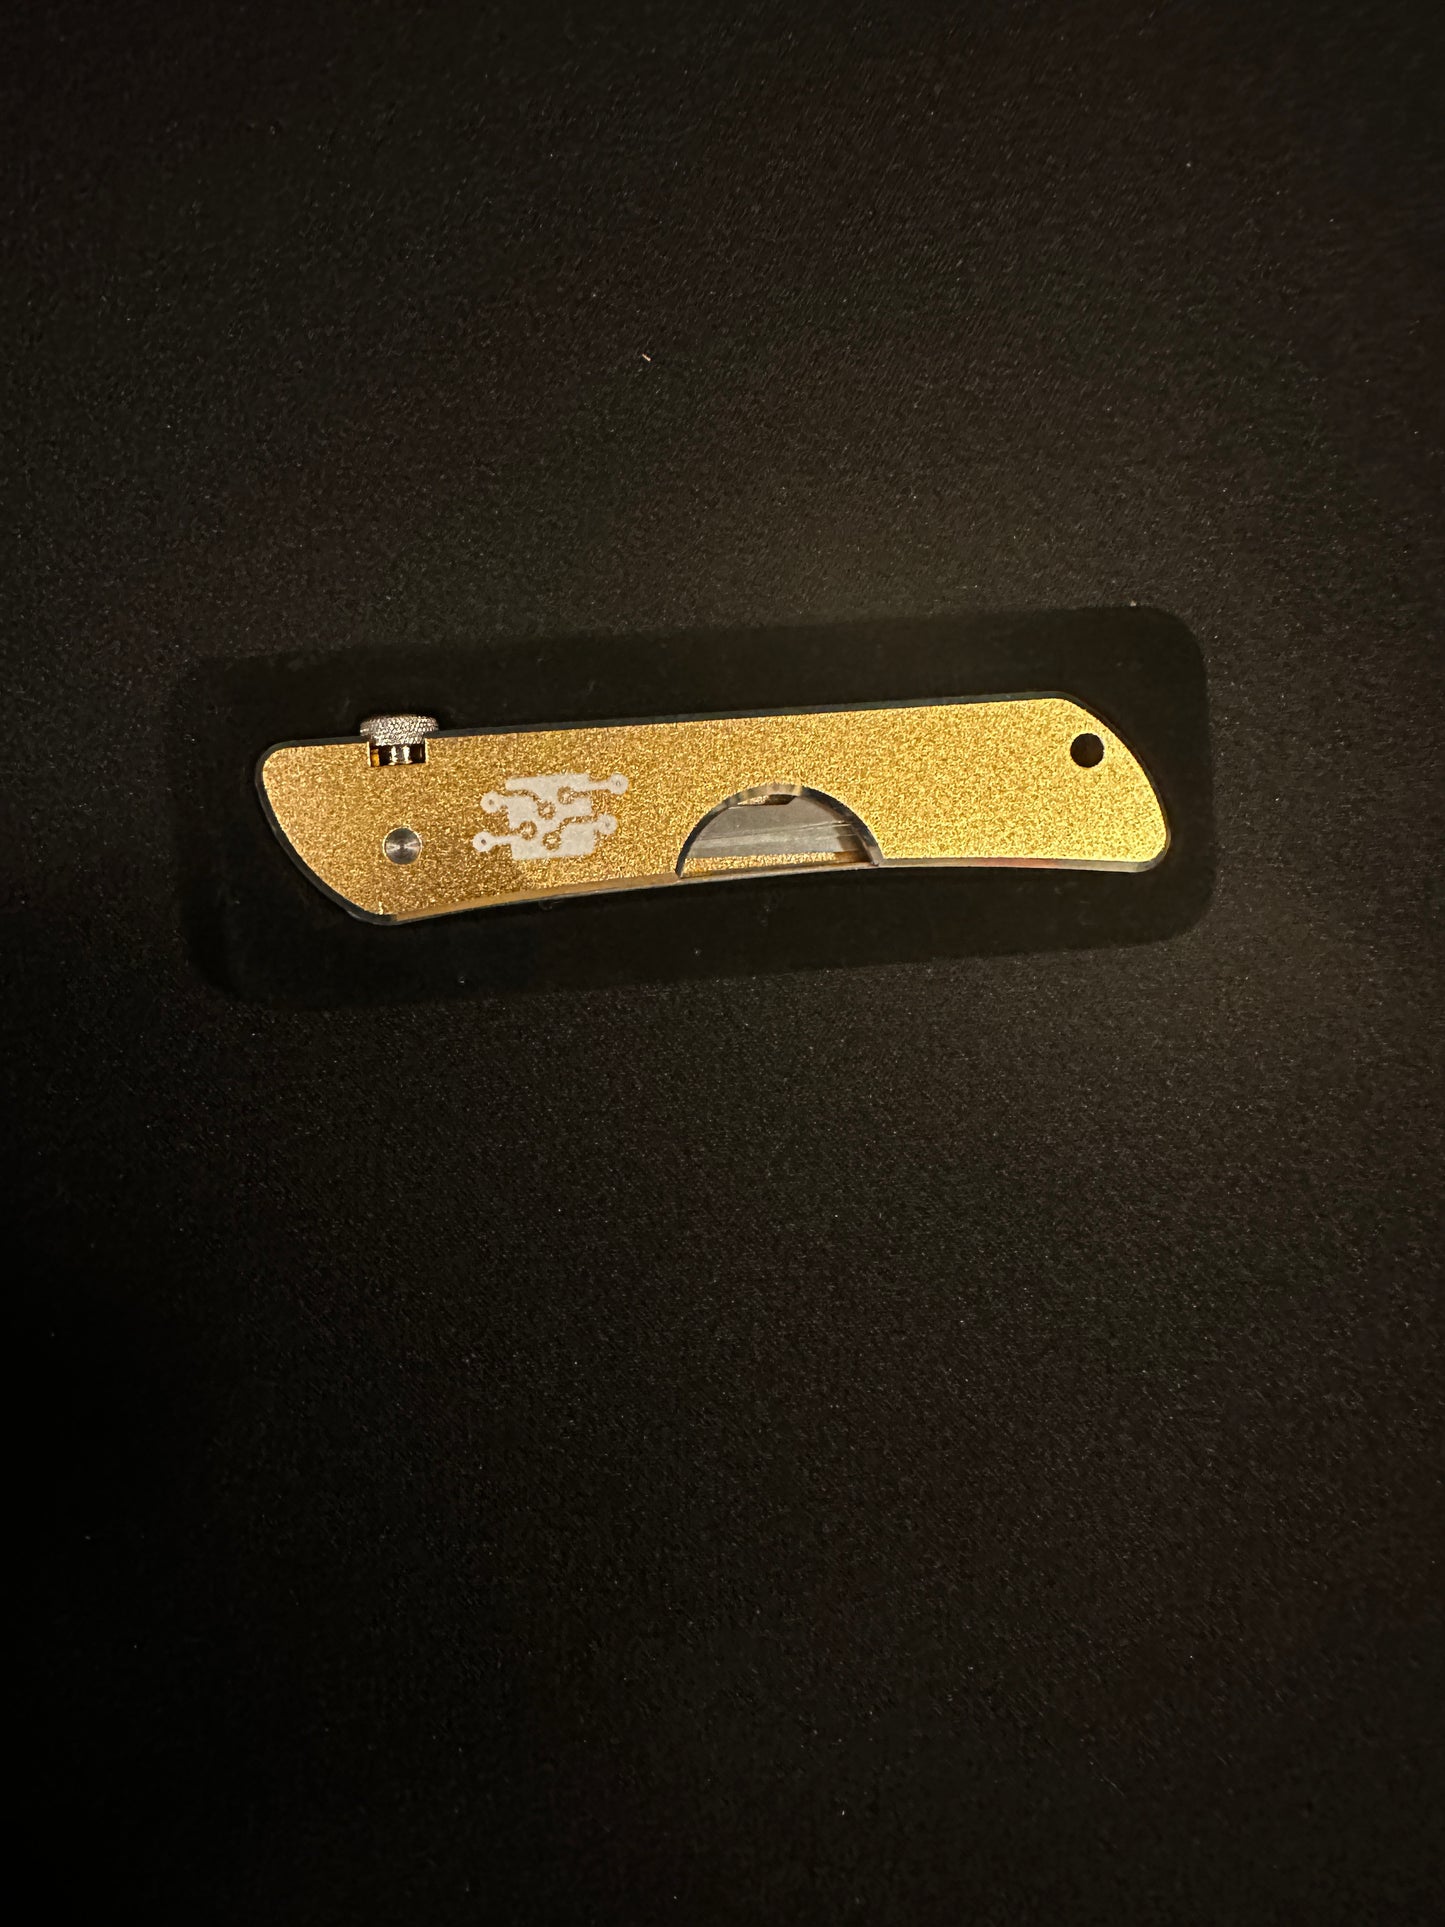 Folding Pocket Lockpick Jackknife Set - Gadget Connections Exclusive Circuit Logo - Limited Edition